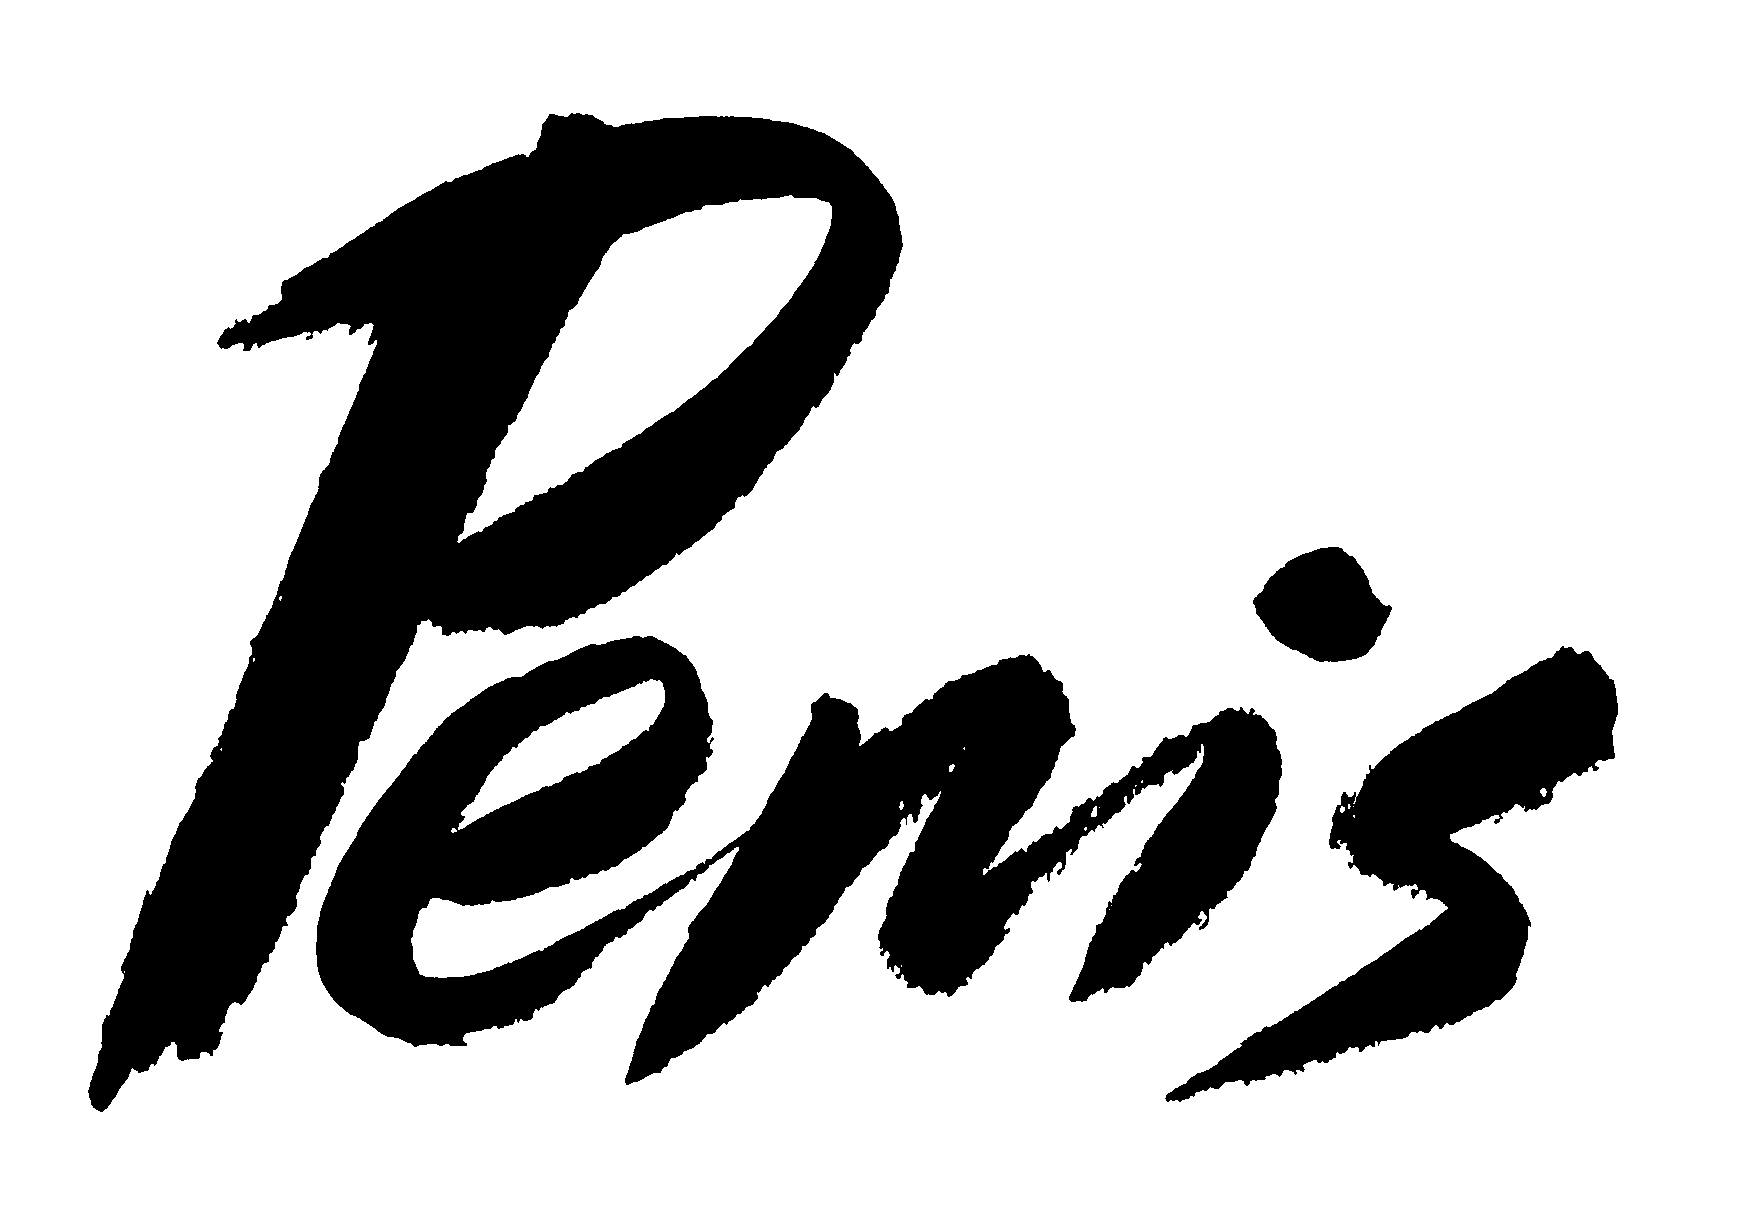 Penis band